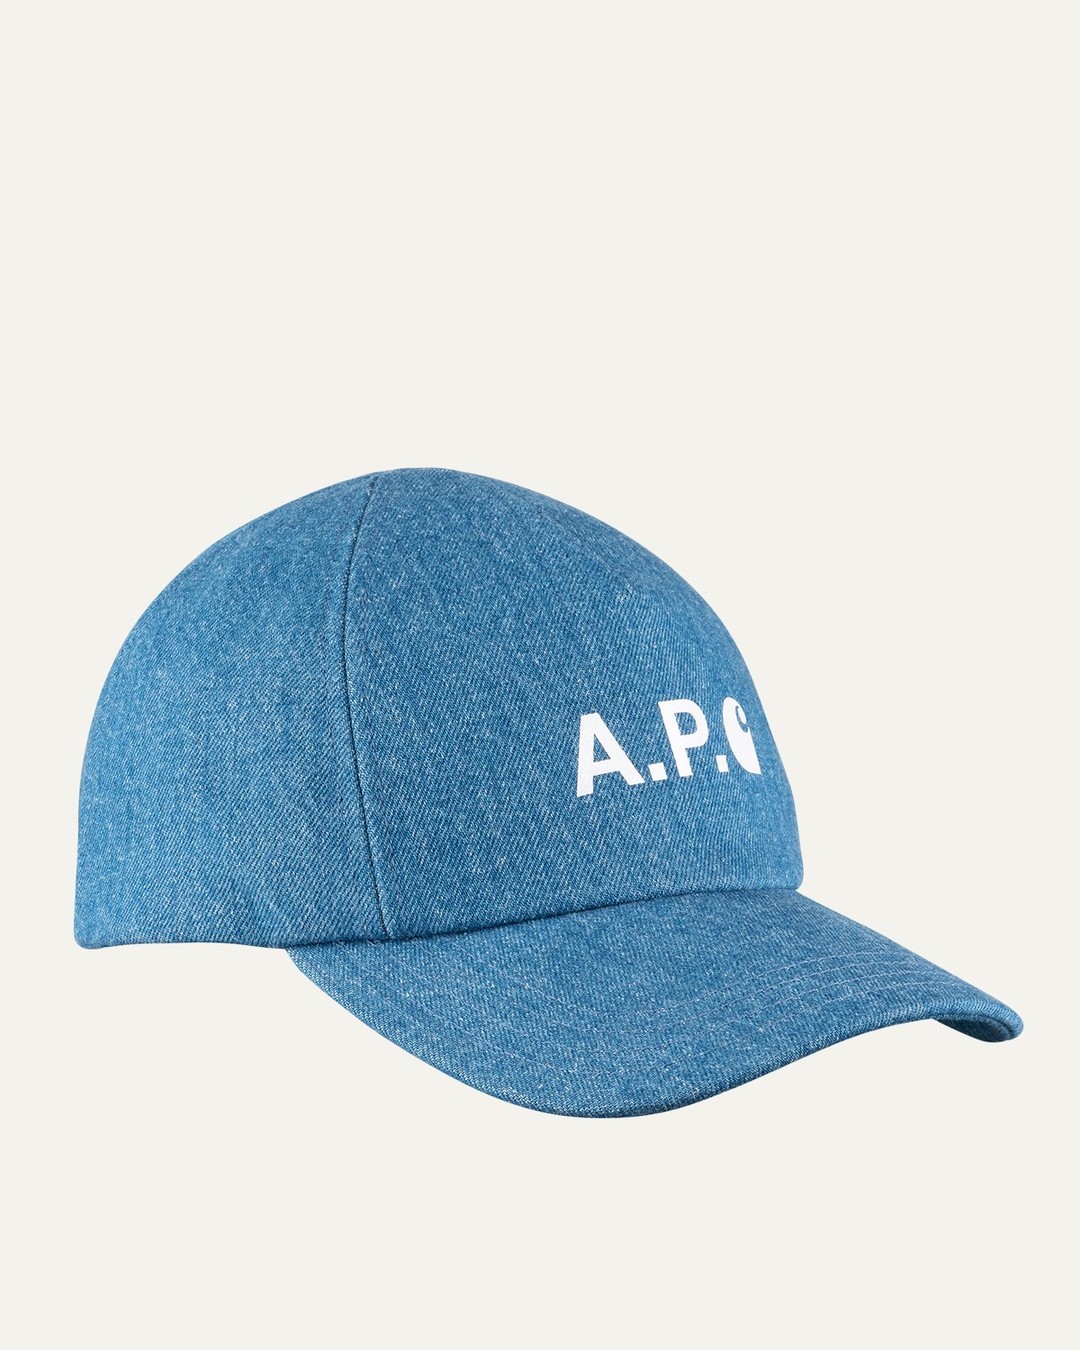 A.P.C. x Carhartt WIP – Cameron Baseball Cap Indigo - Hats - Blue - Image 1